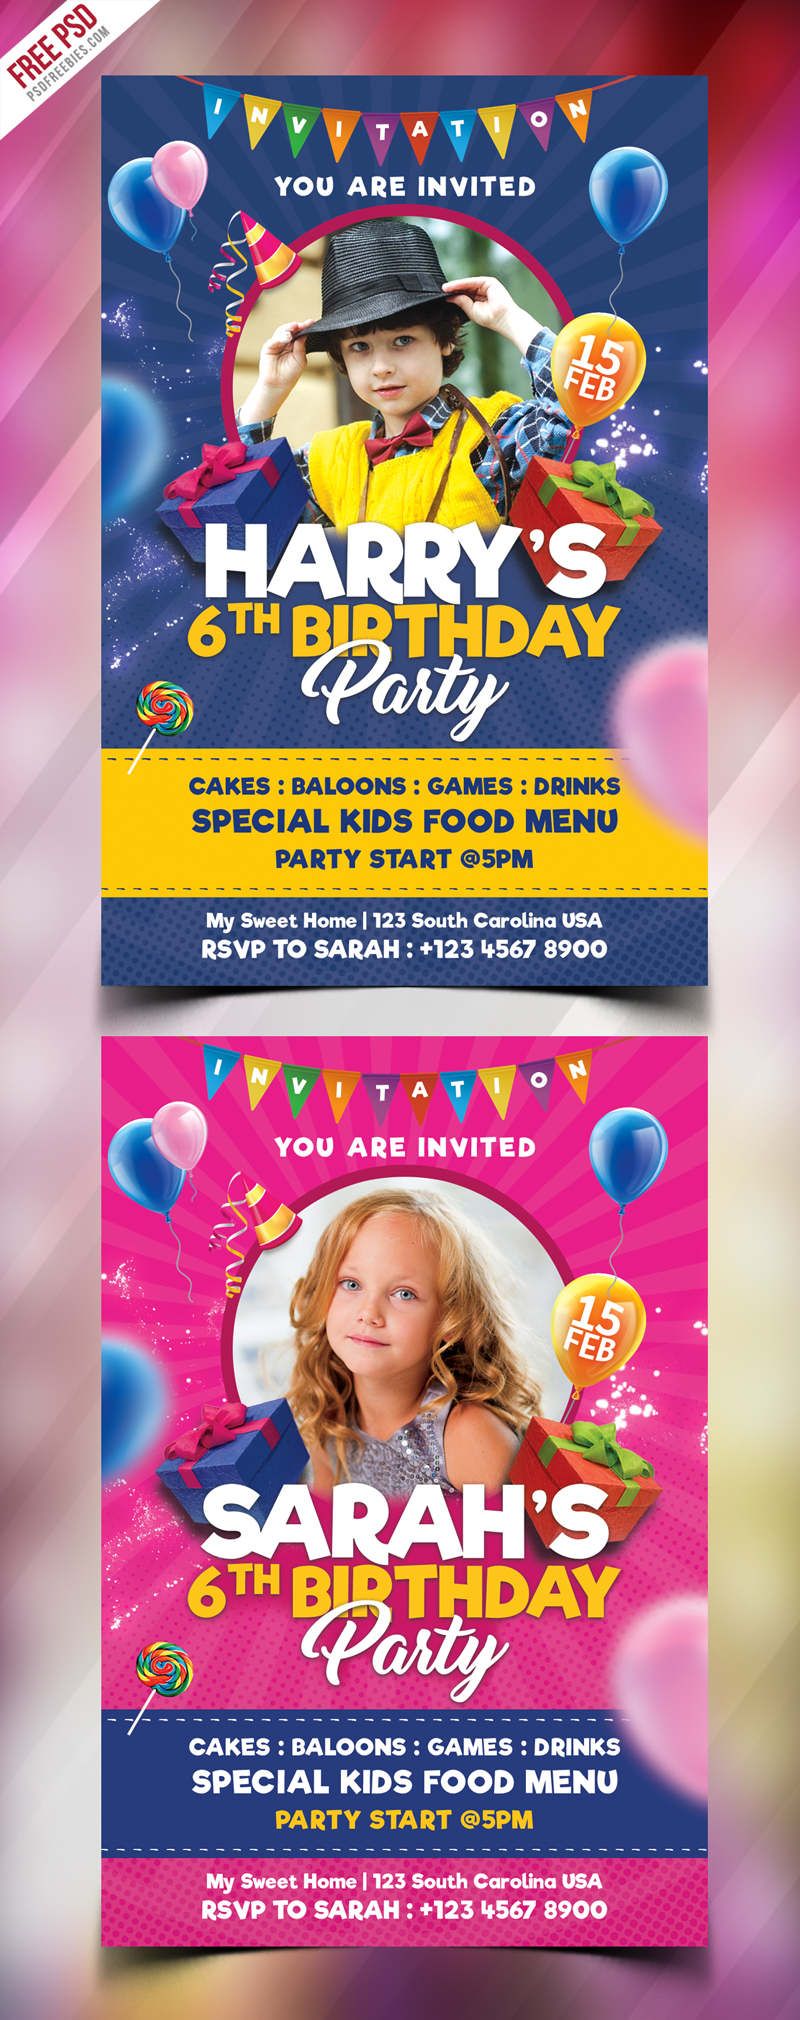 Kids Birthday Party Invitation Card PSD PSDFreebies